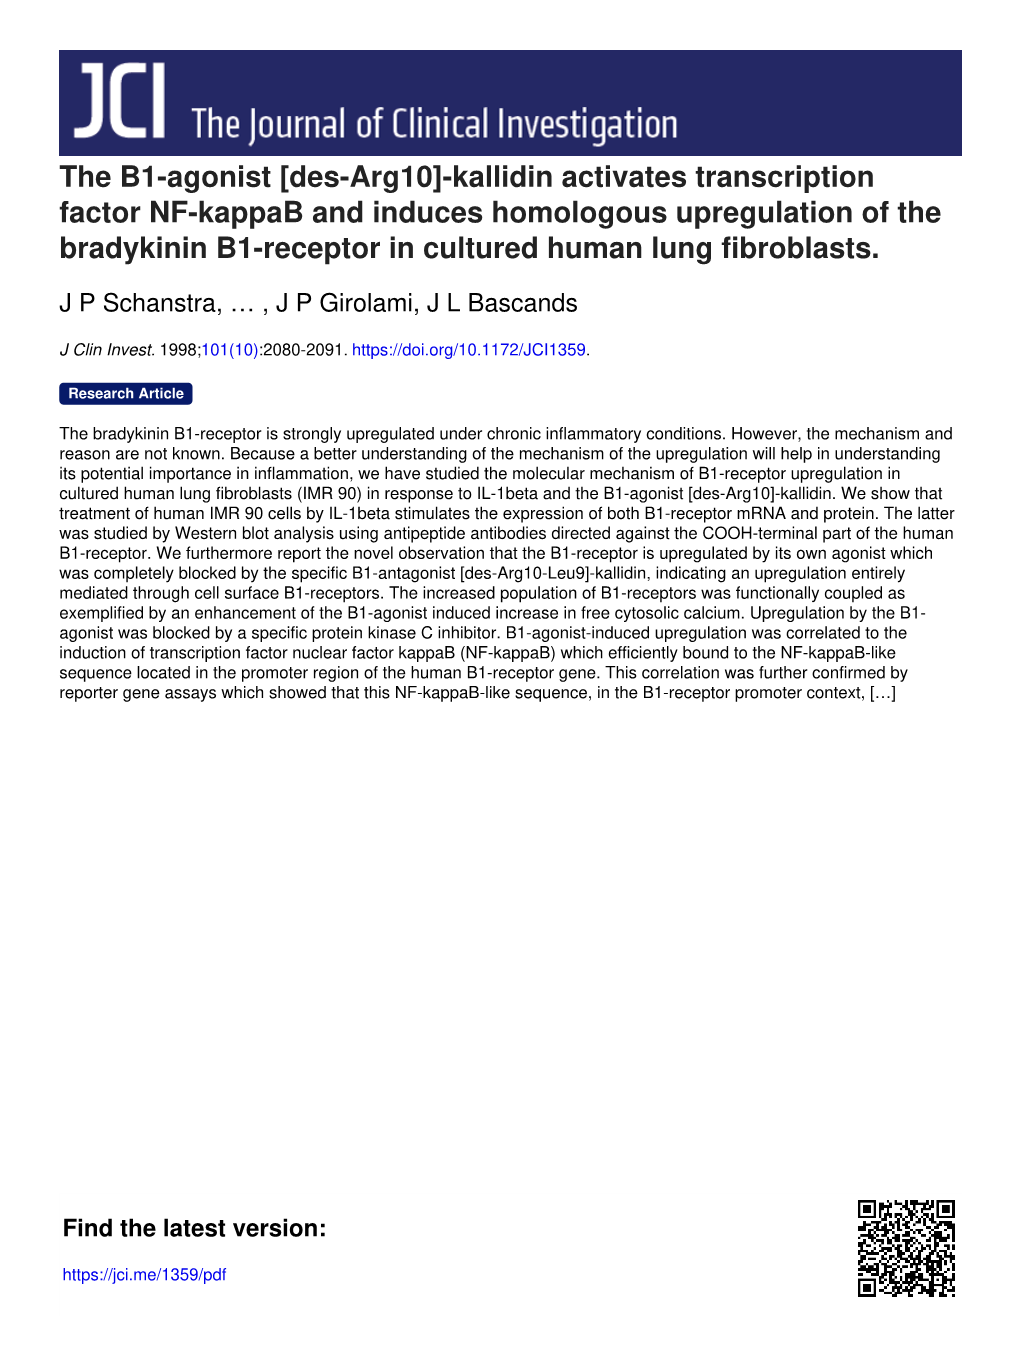 Kallidin Activates Transcription Factor NF-Kappab and Induces Homologous Upregulation of the Bradykinin B1-Receptor in Cultured Human Lung Fibroblasts